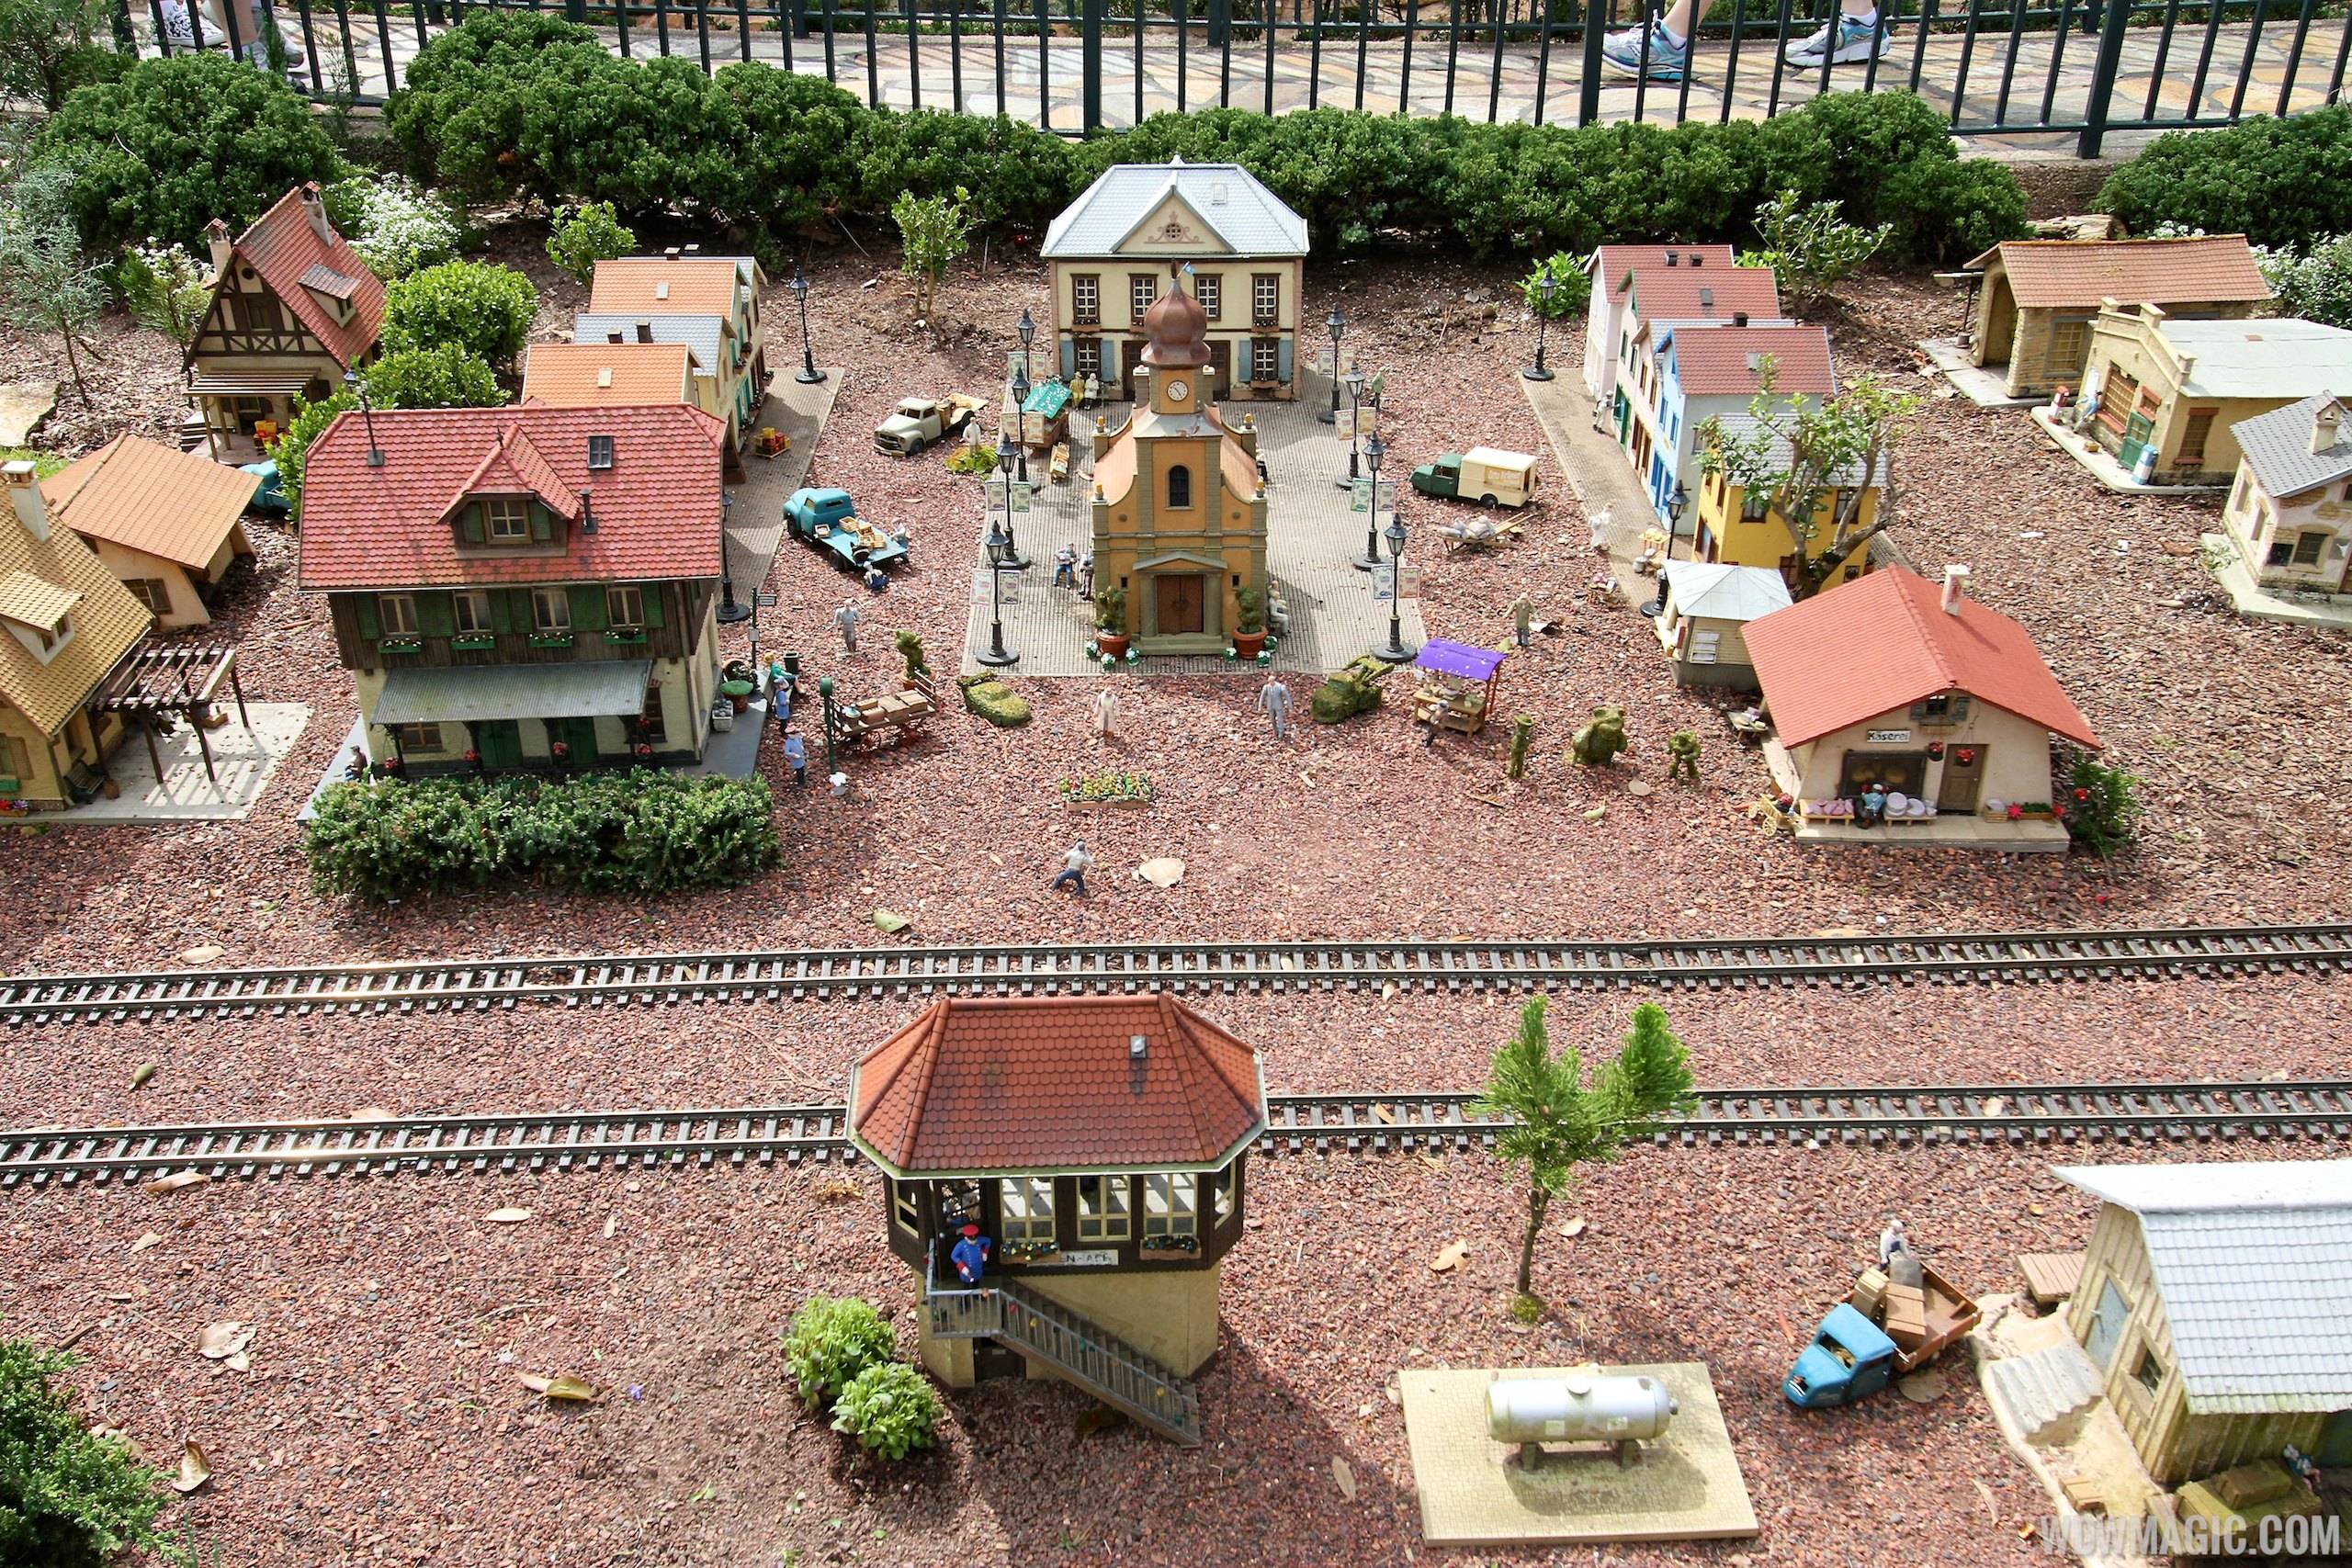 2014 Epcot Flower and Garden Festival - Model railroad